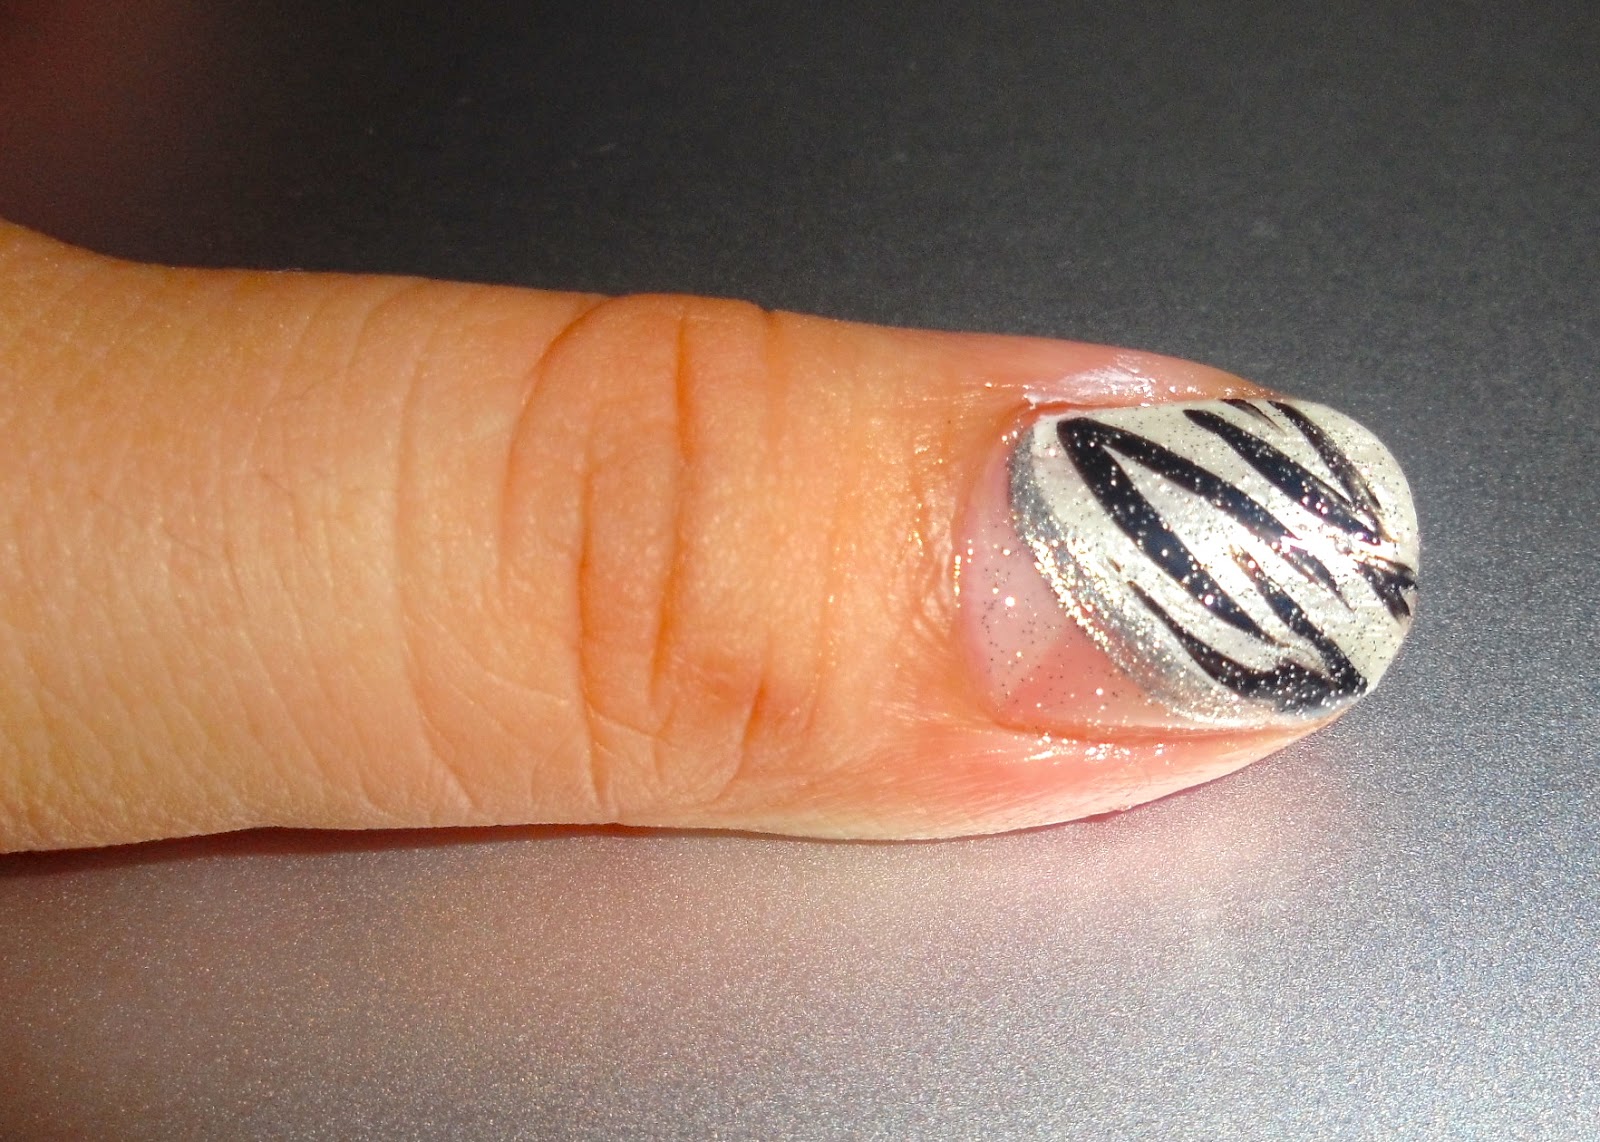 5. Zebra Print Nail Art Ideas - wide 2